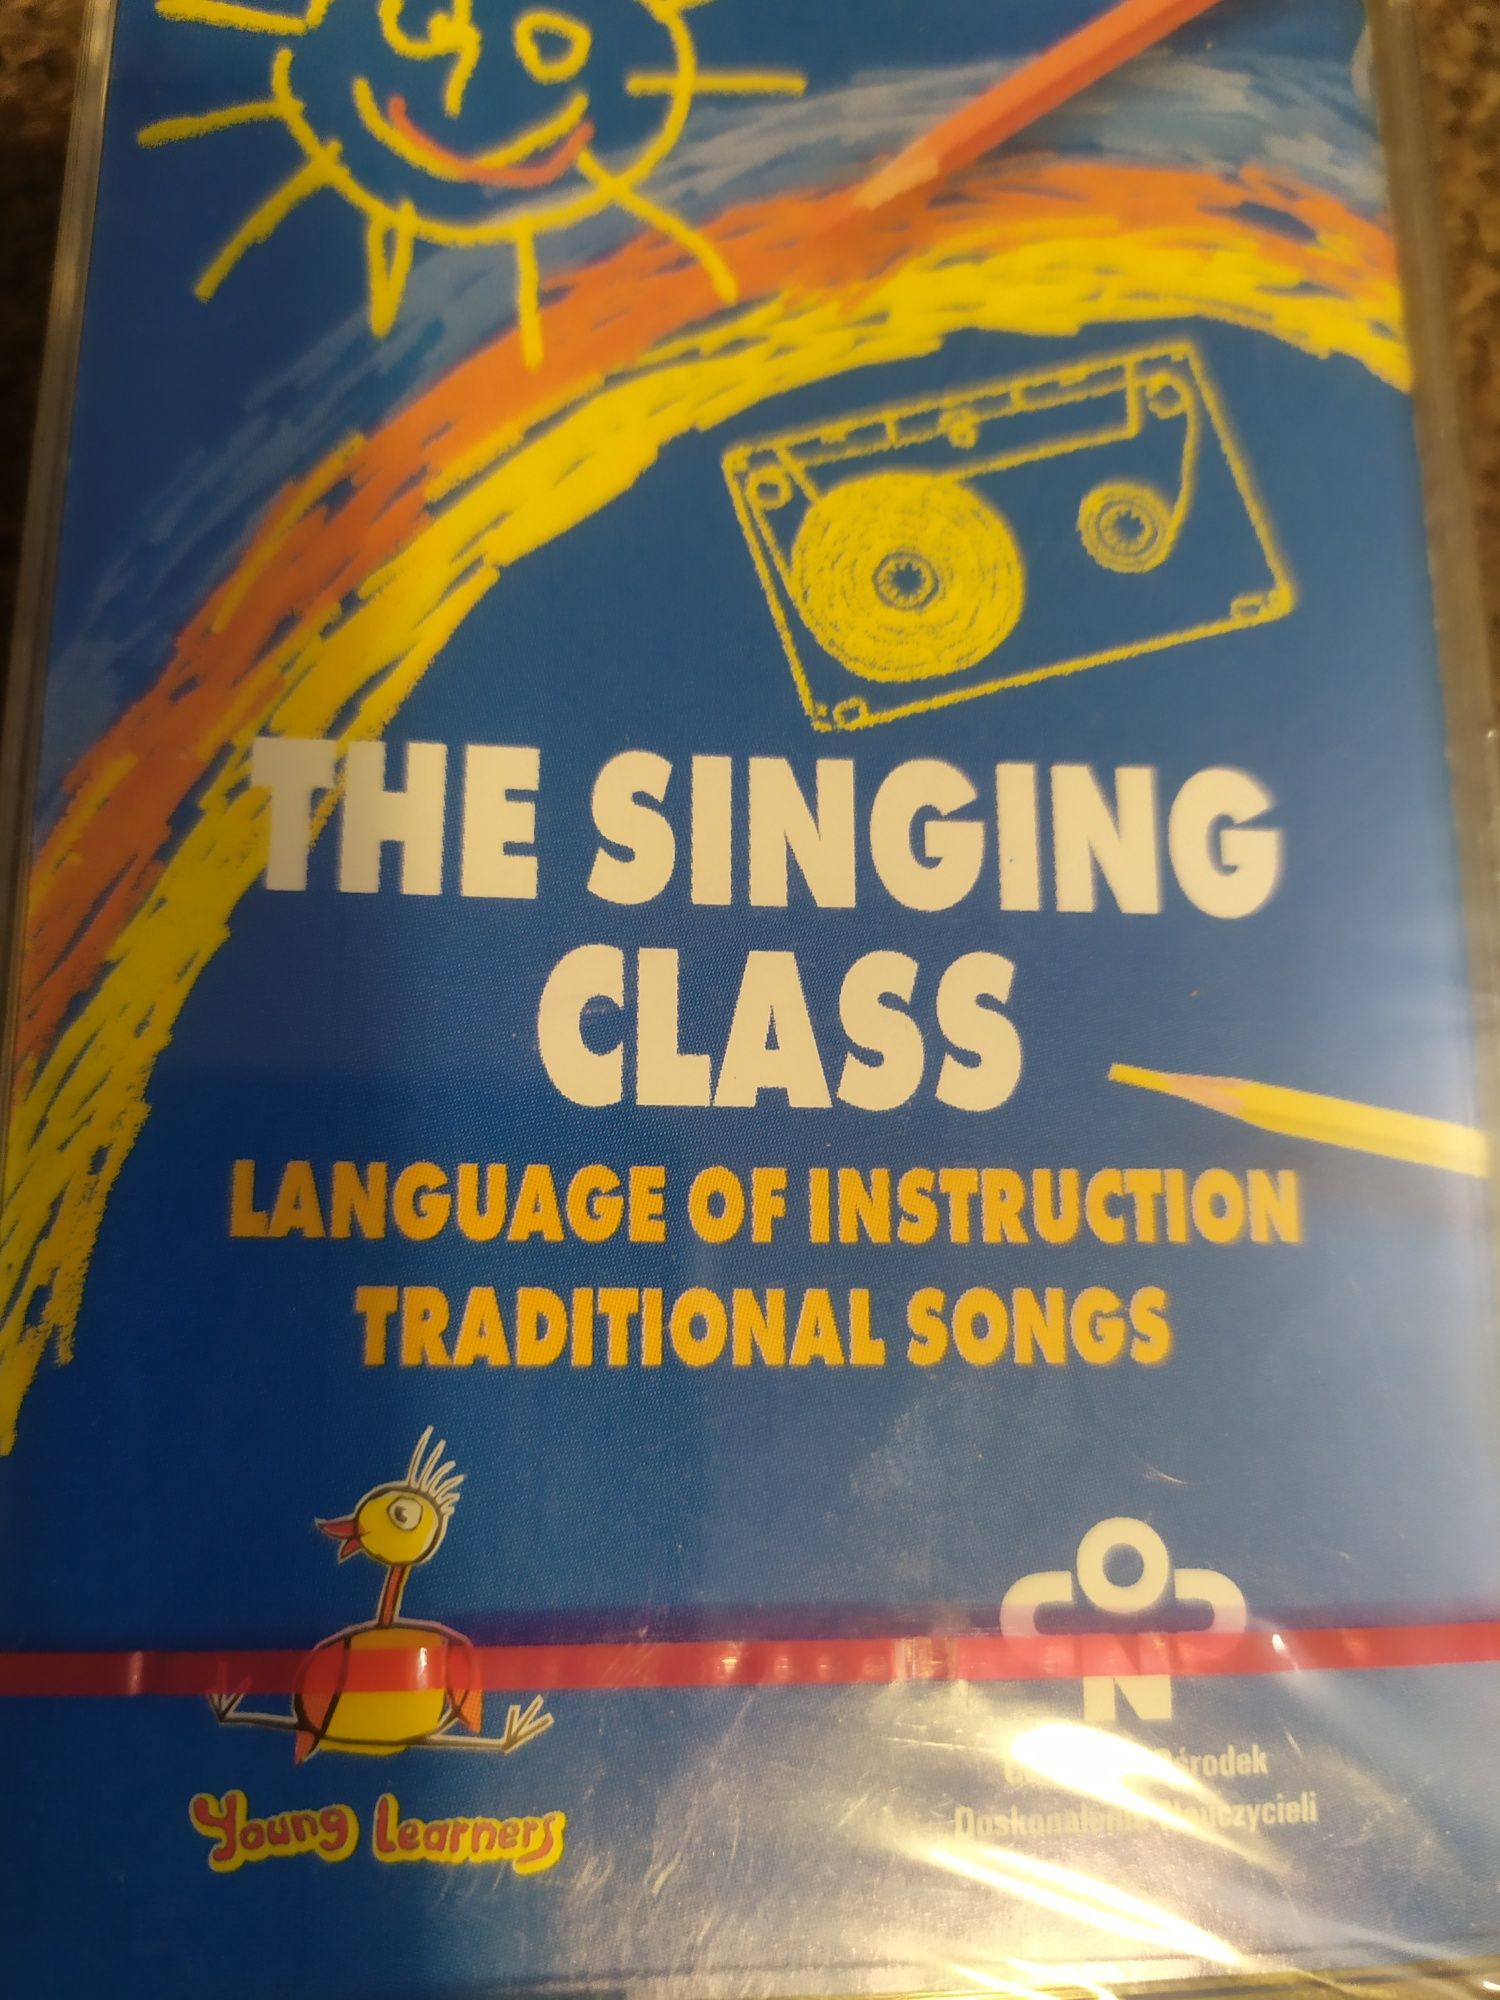 Kaseta "The singing class"